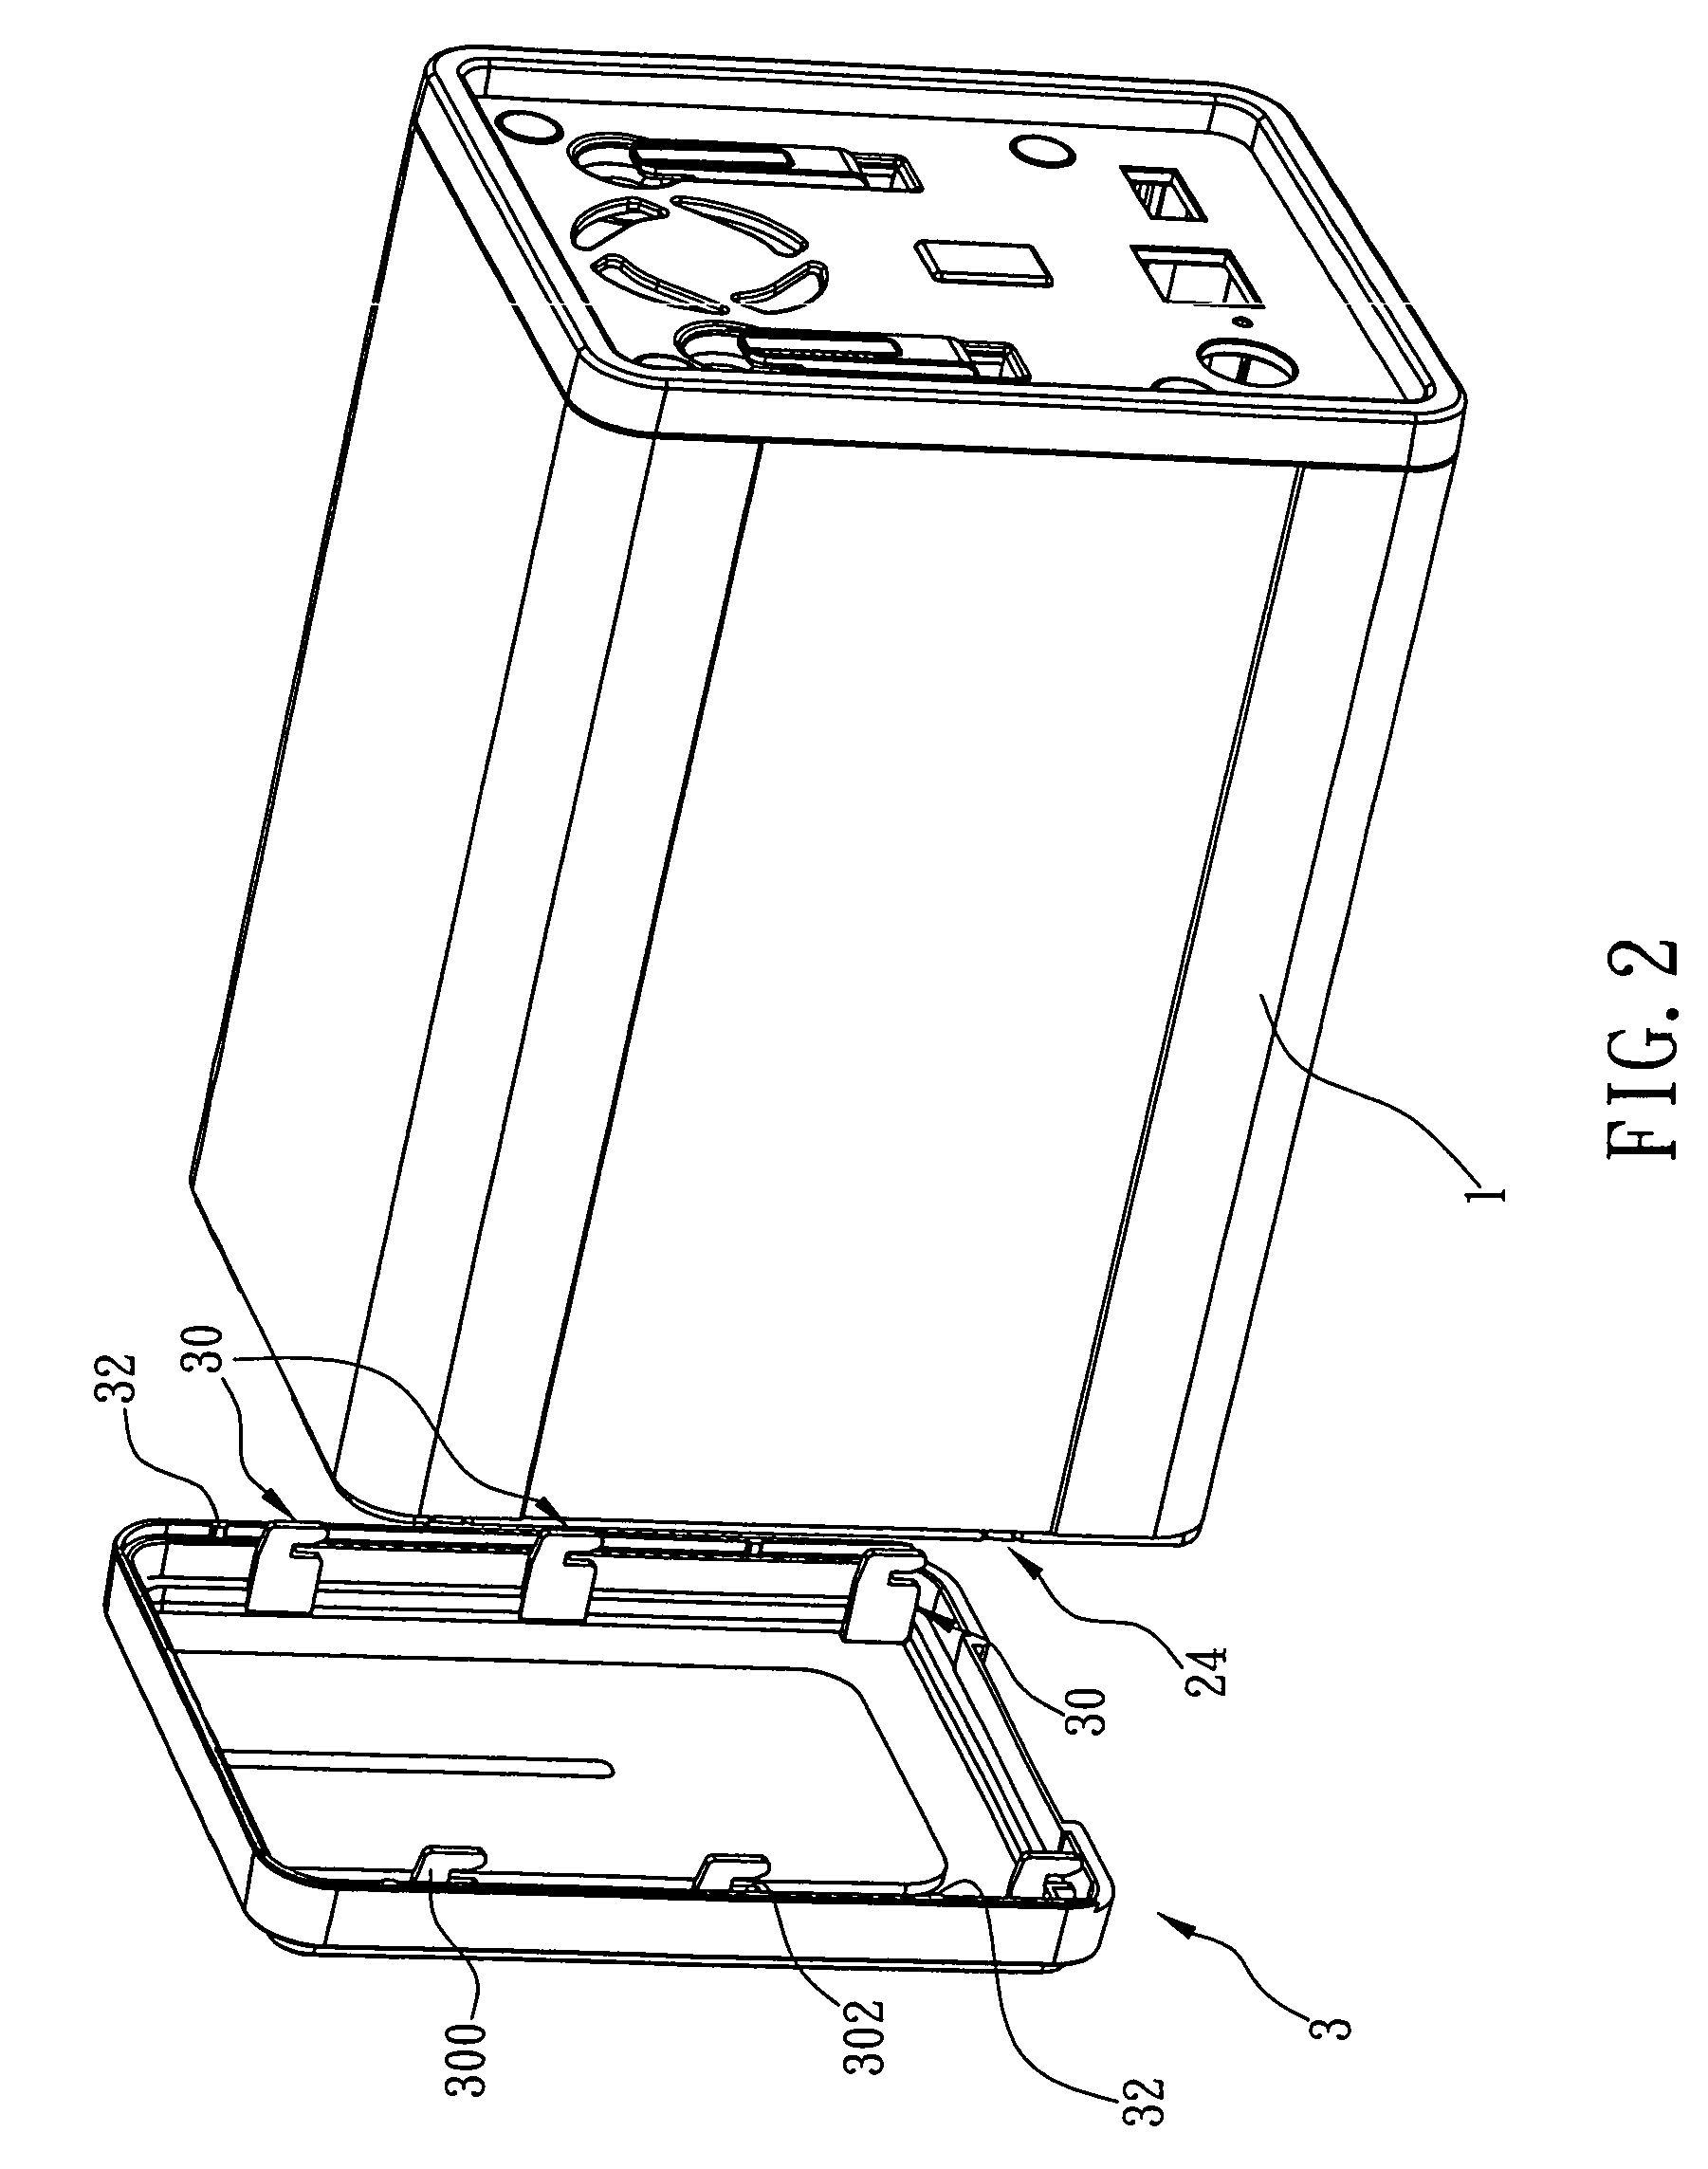 External box for hard disk drives